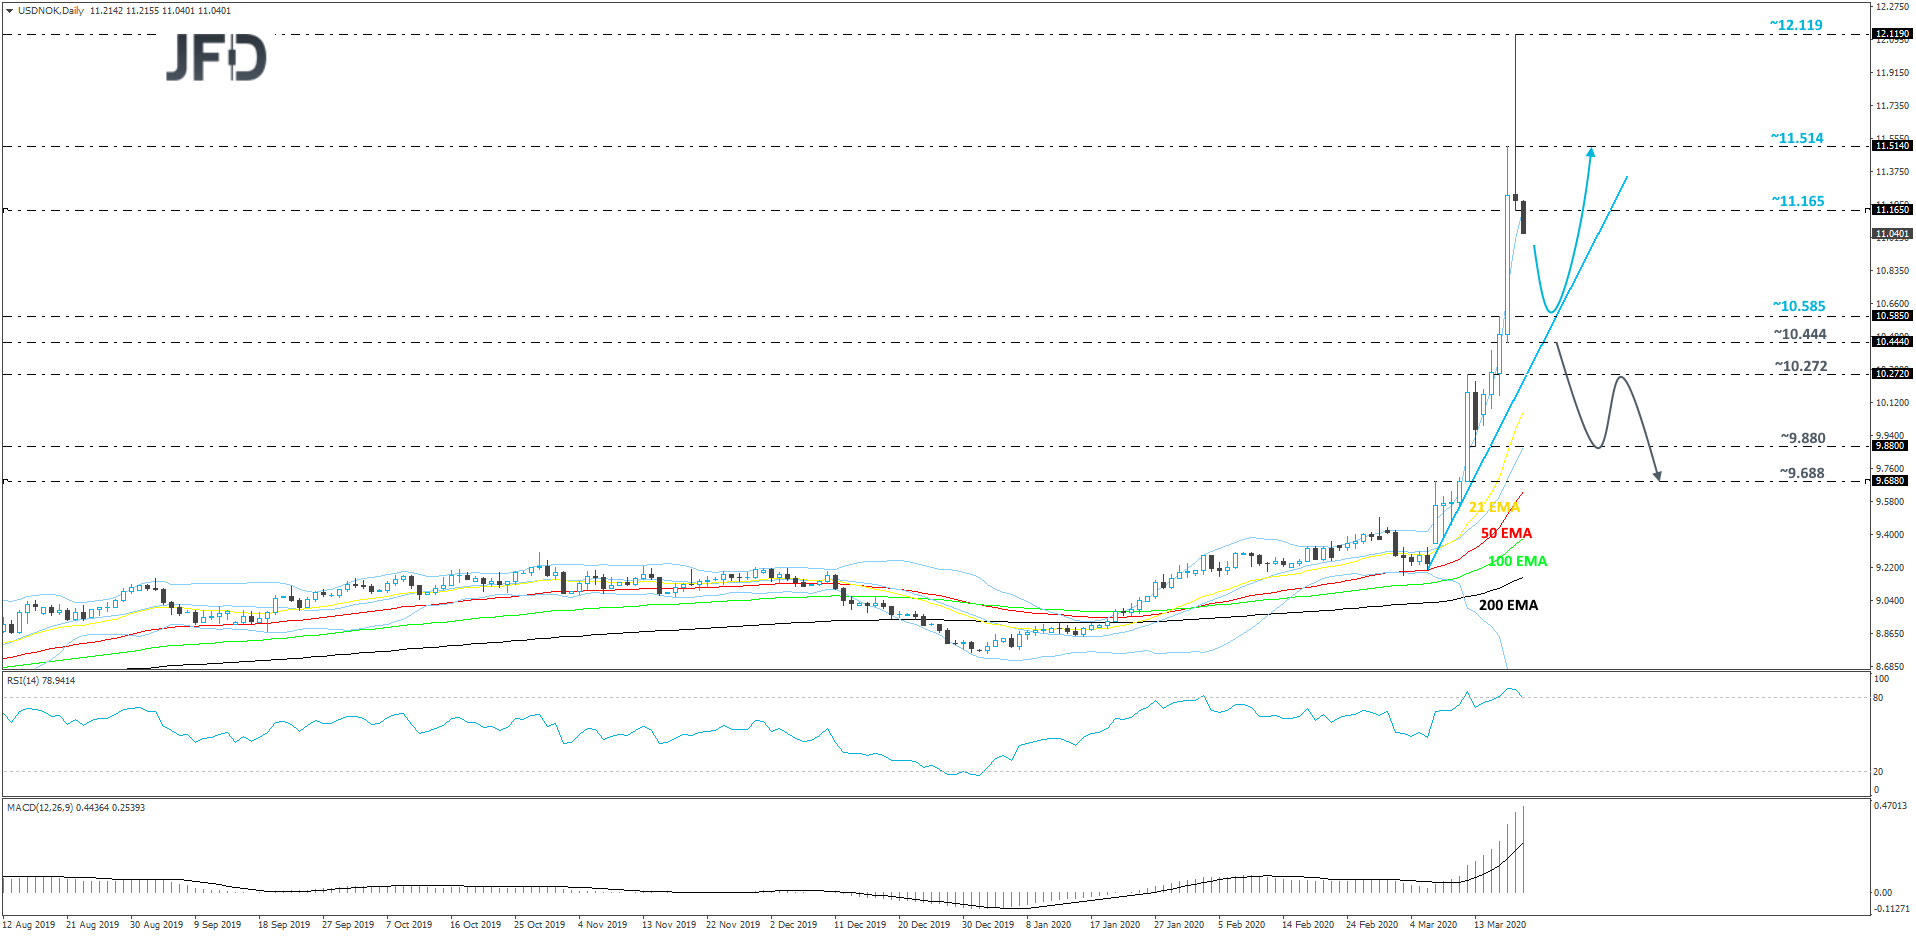 USD/NOK daily chart technical analysis